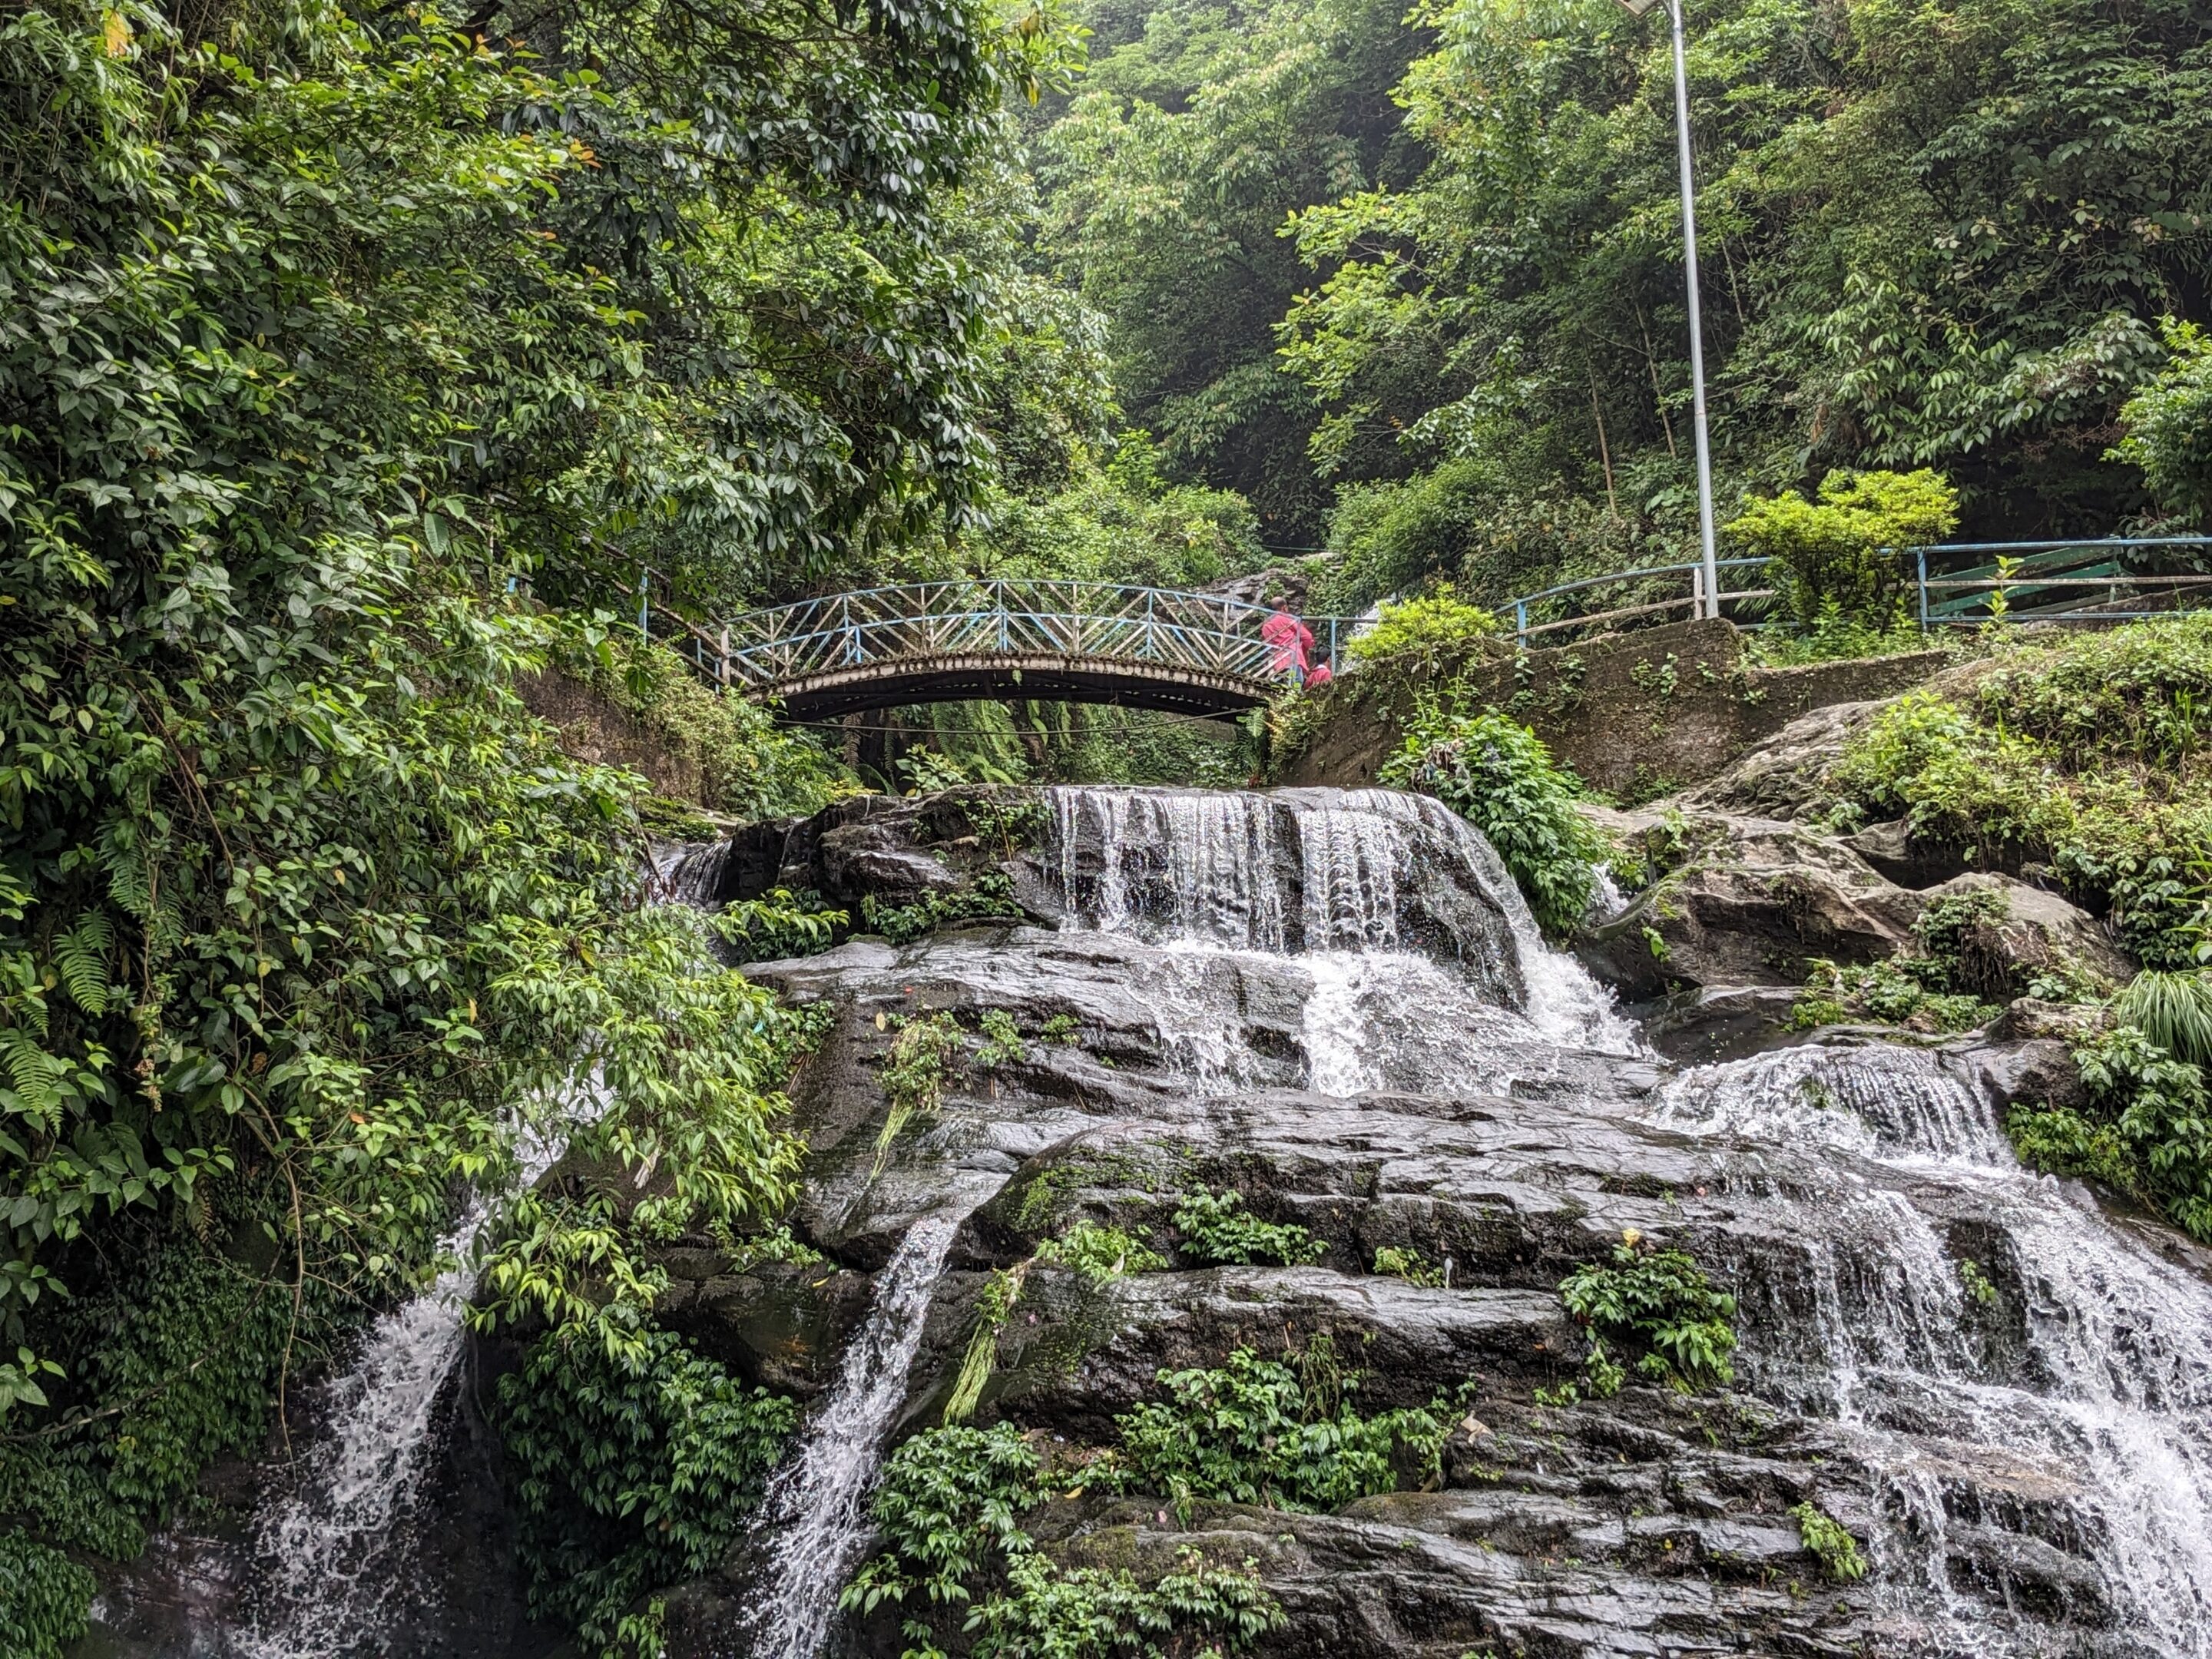 Rock Garden - Darjeeling Budget Travel Guide